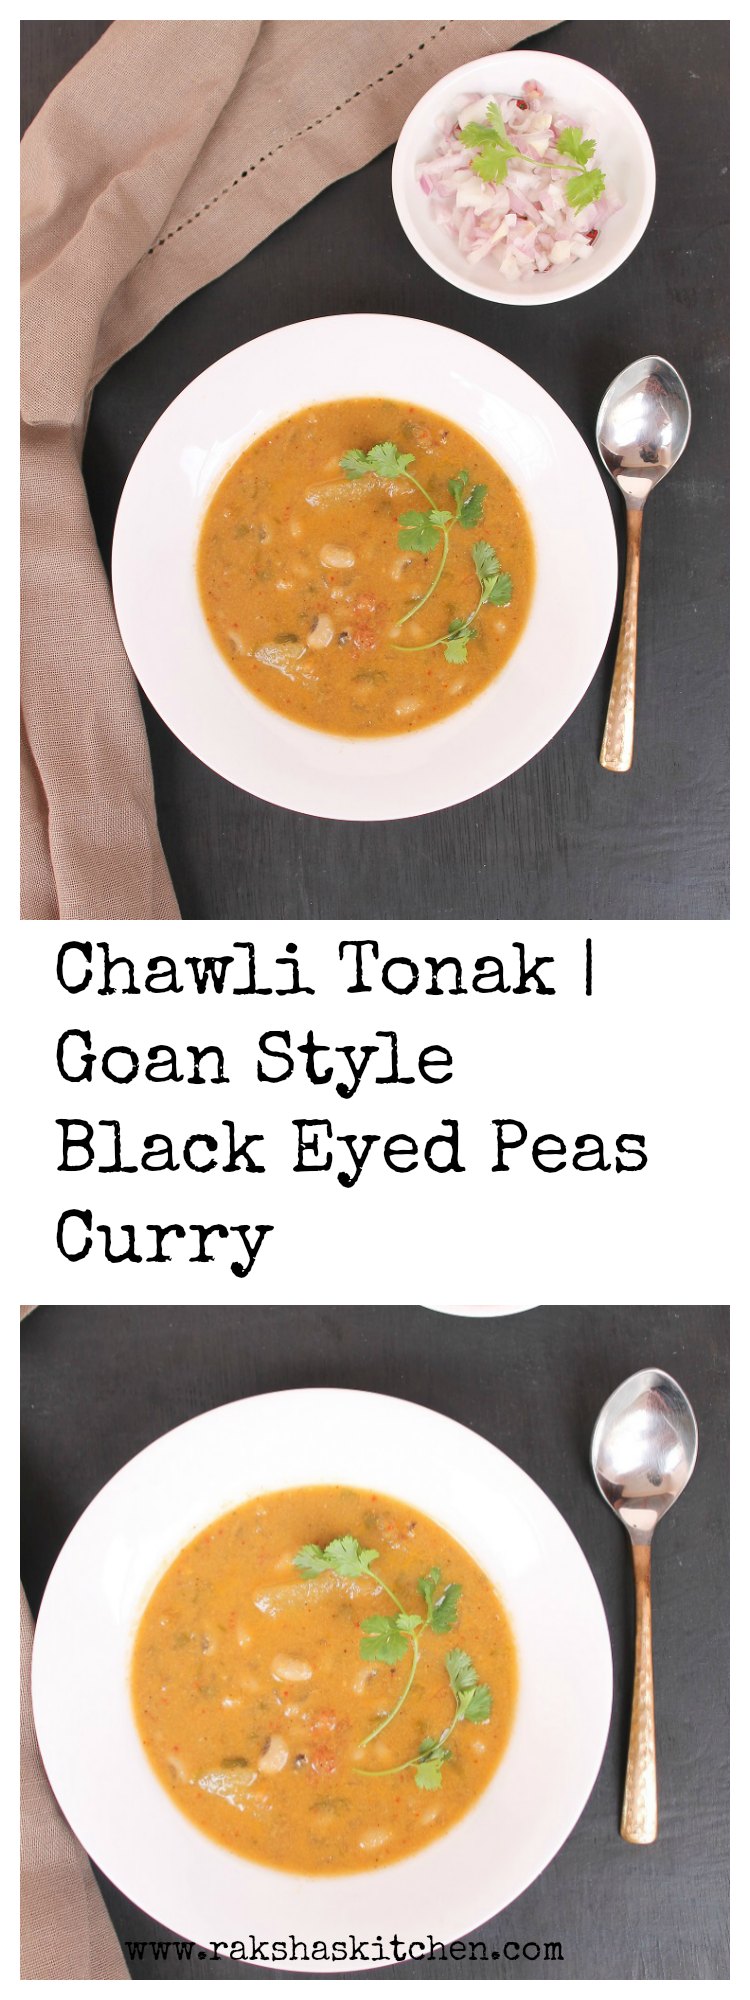 Goan Style Black Eyed Peas Curry | Chawli Tonak - Raksha's Kitchen